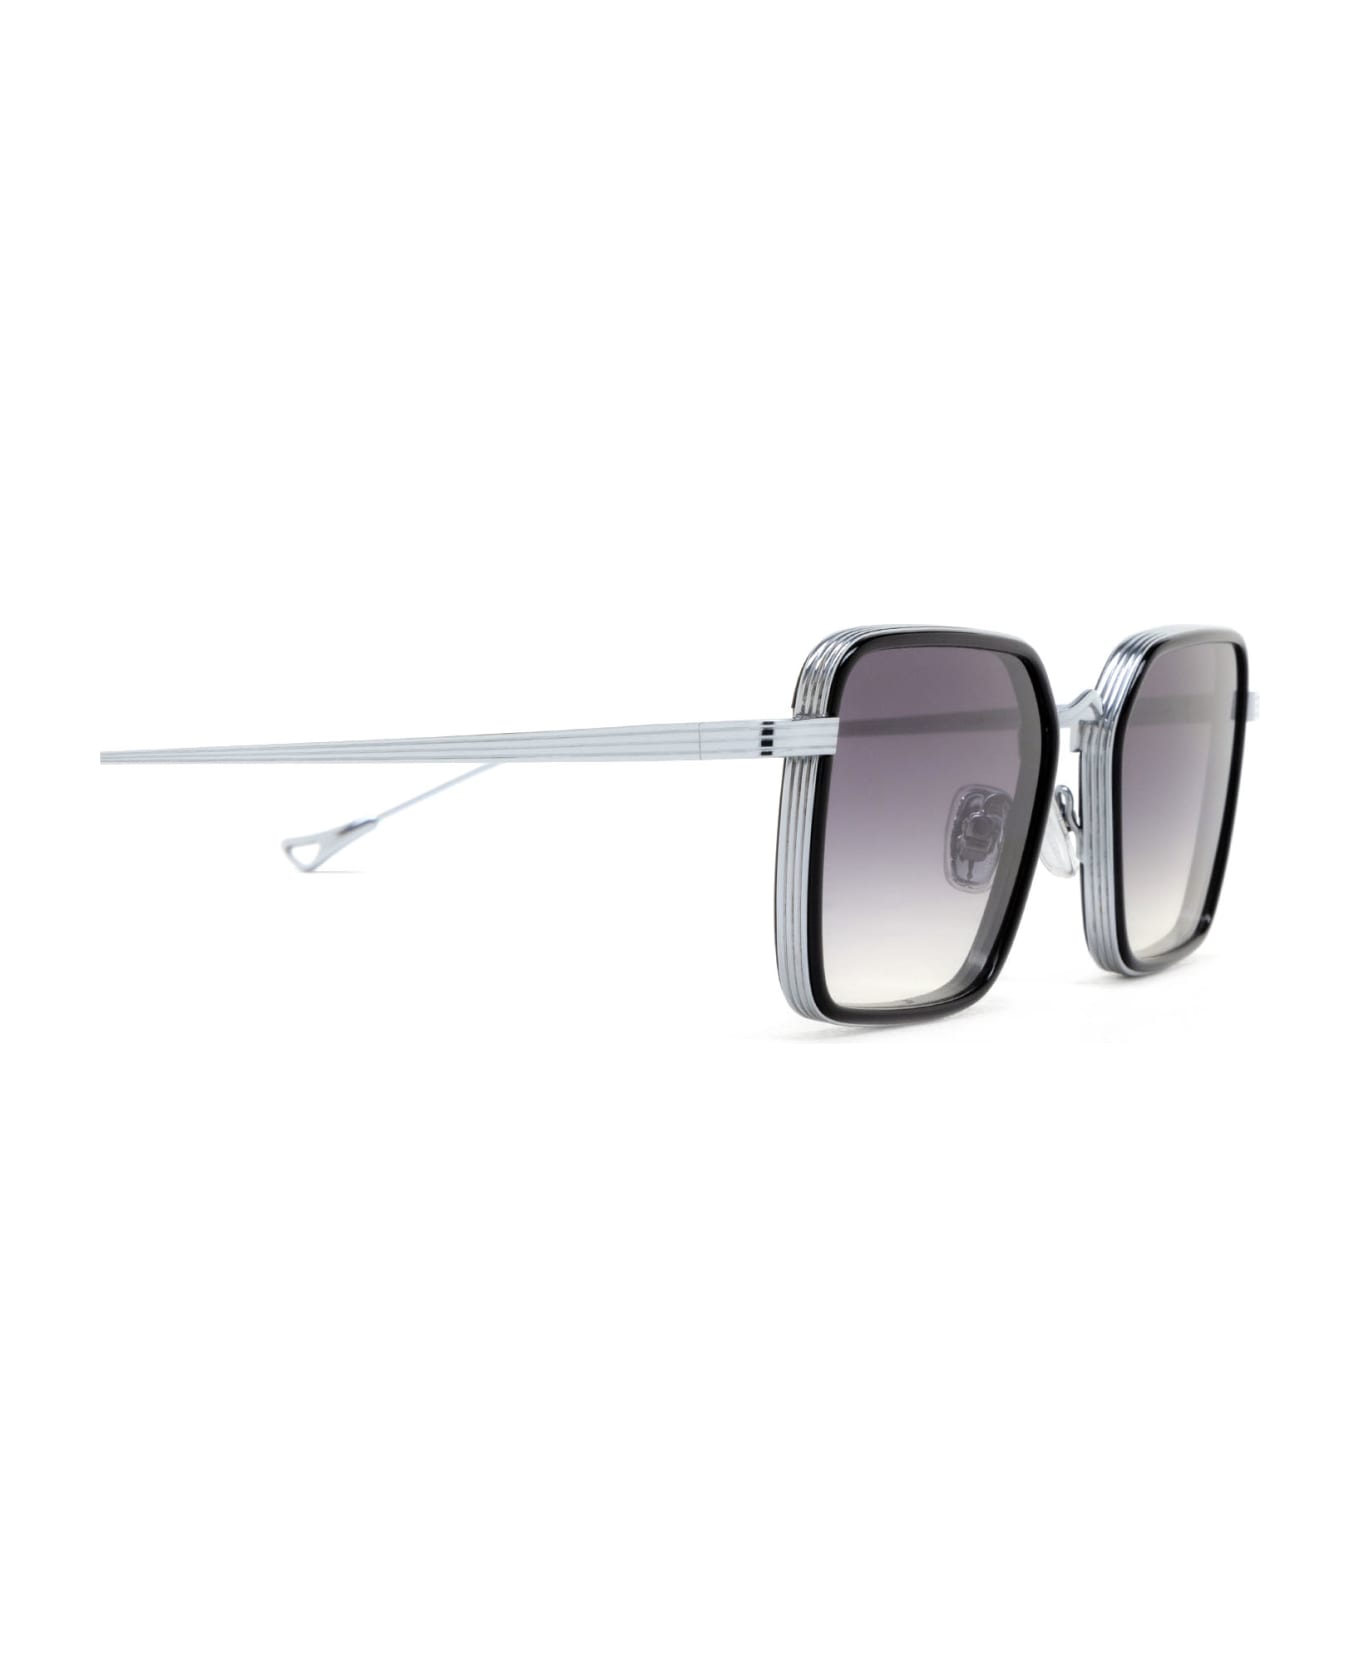 Eyepetizer Nomad Black Sunglasses - Black サングラス